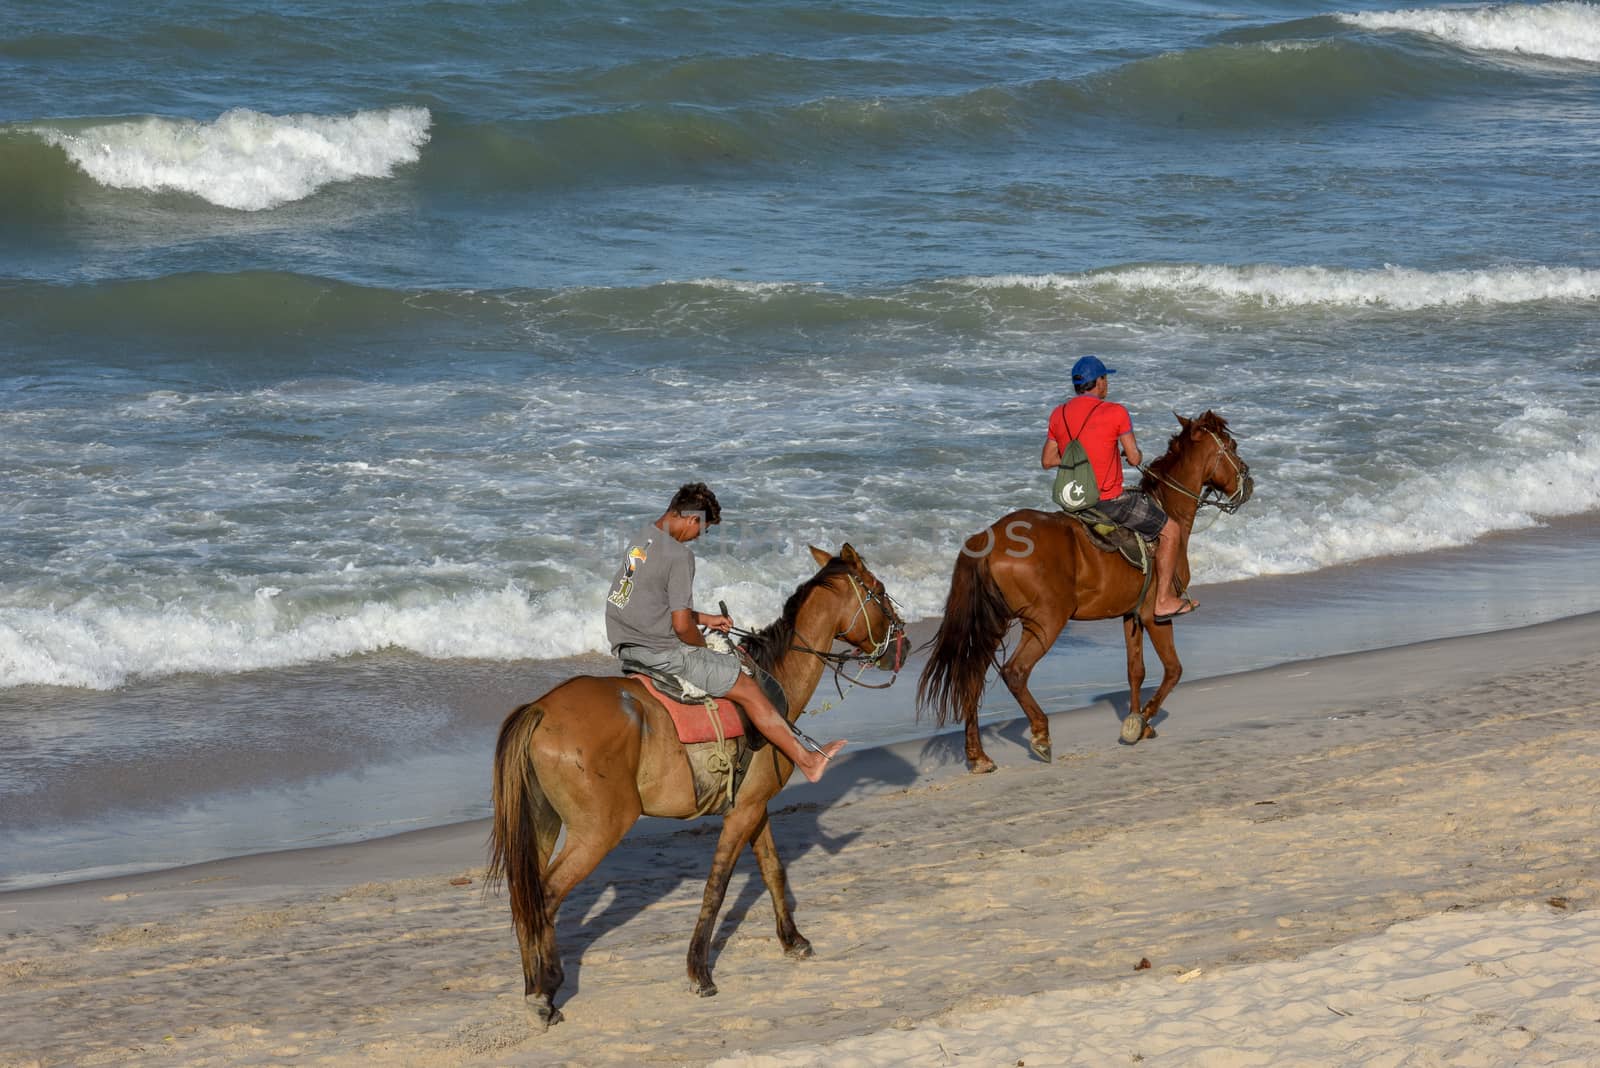 Canoa Quebrada, Brazil - 18 January 2019: pepole riding horses at the beach of Canoa Quebrada on Brazil